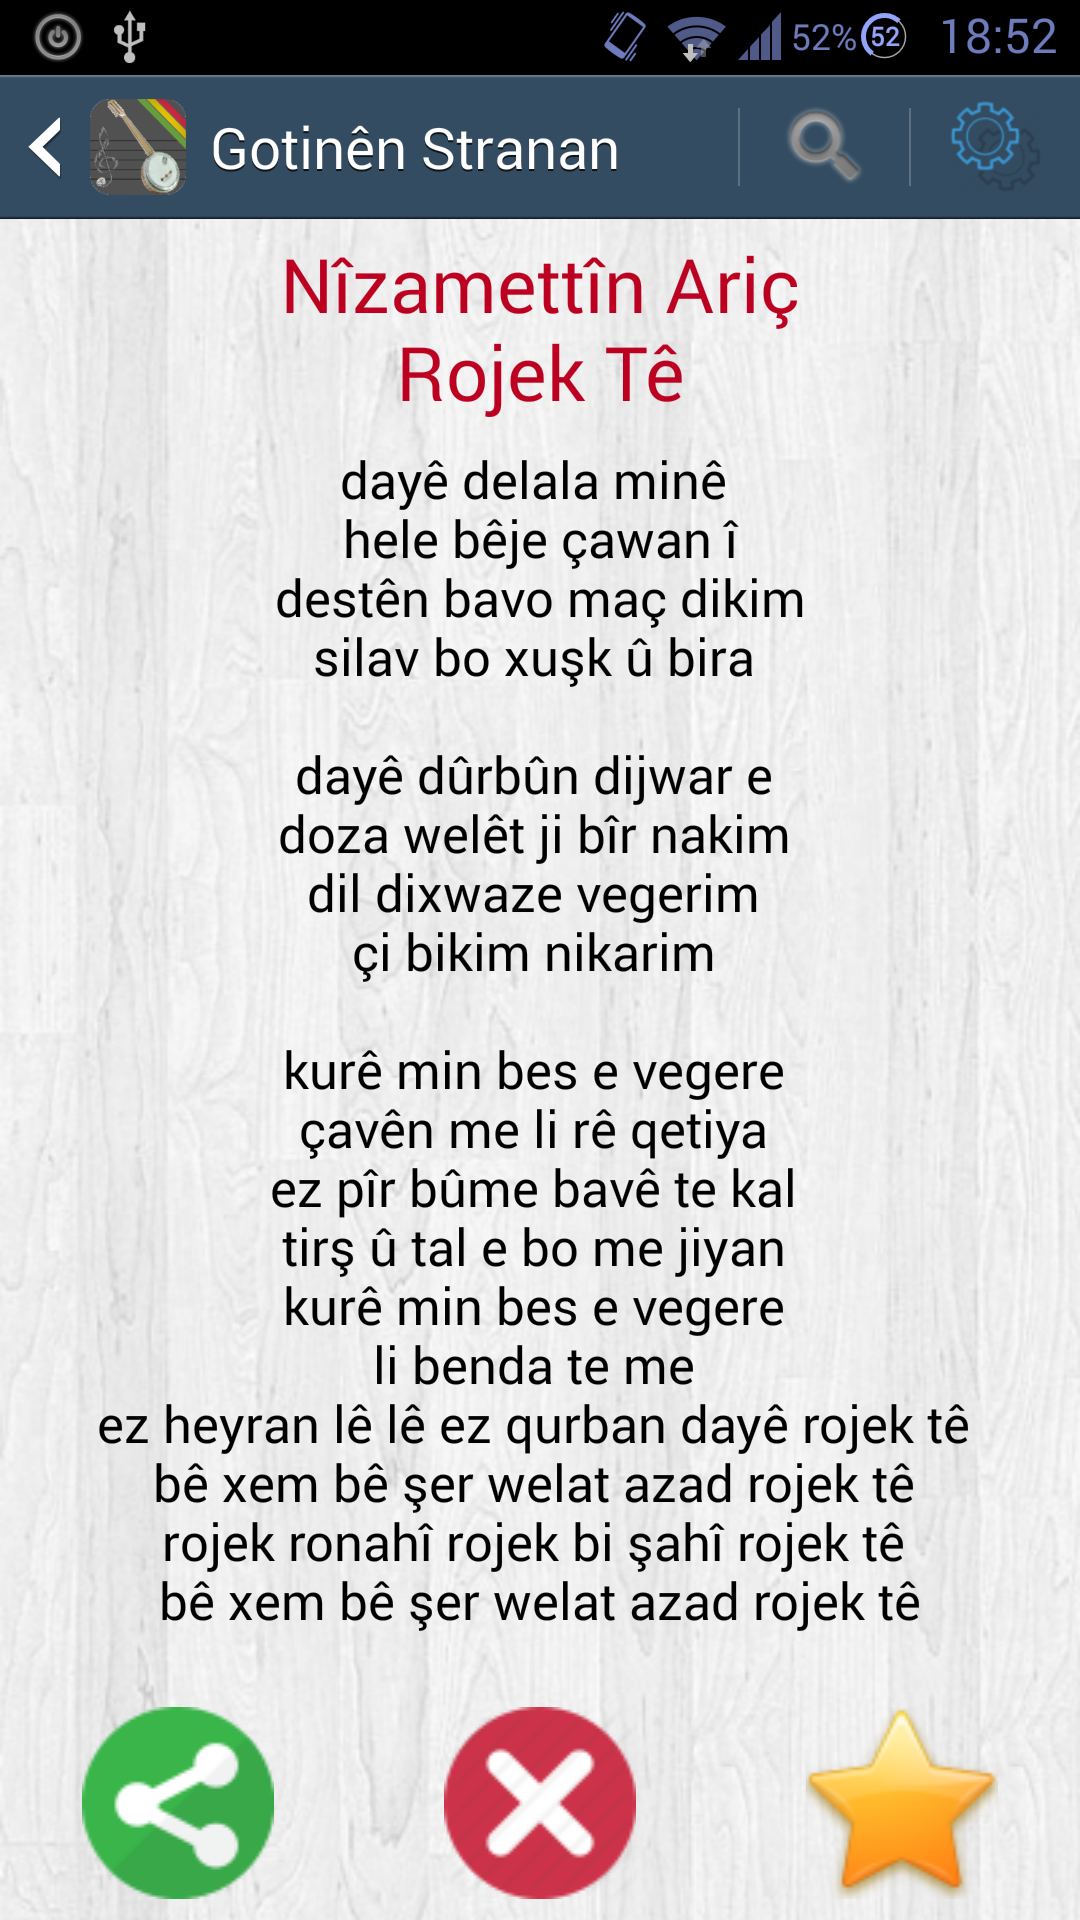 Android application Gotinên Stranan (Kurd. Lyrics) screenshort